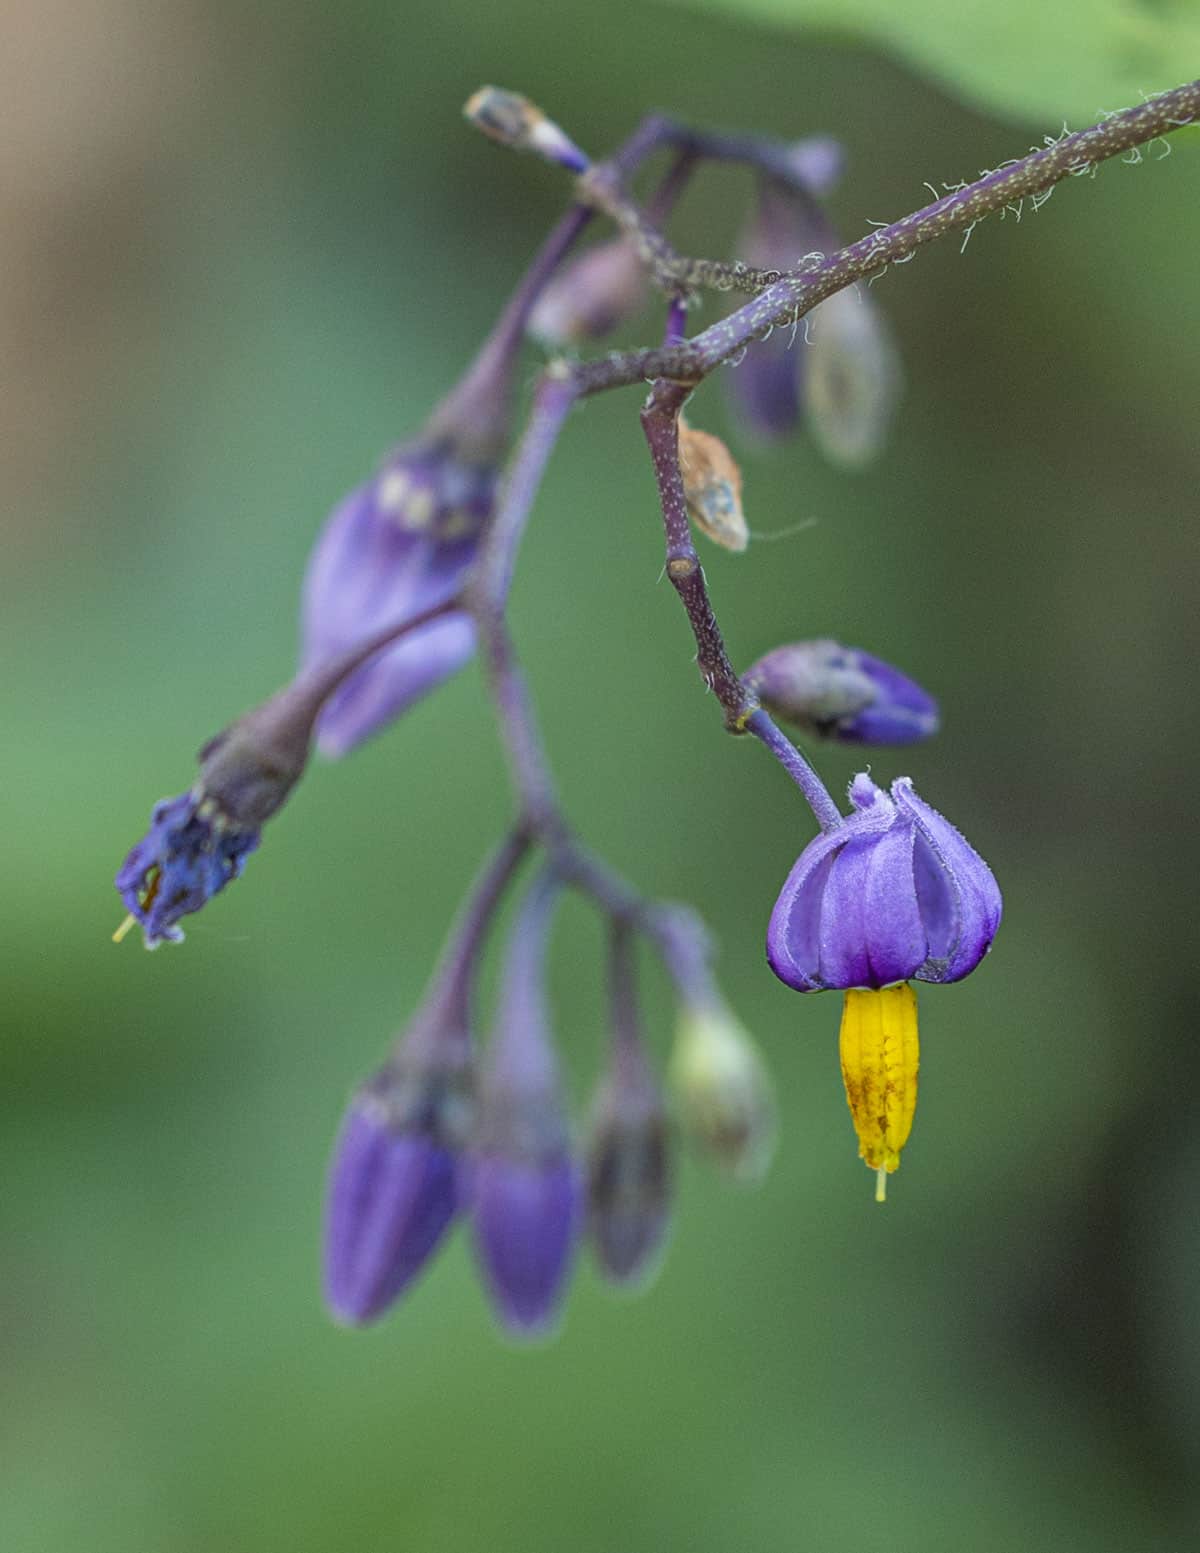 Purple flowers of creeping nightshade plants (Solanum dulcamara).